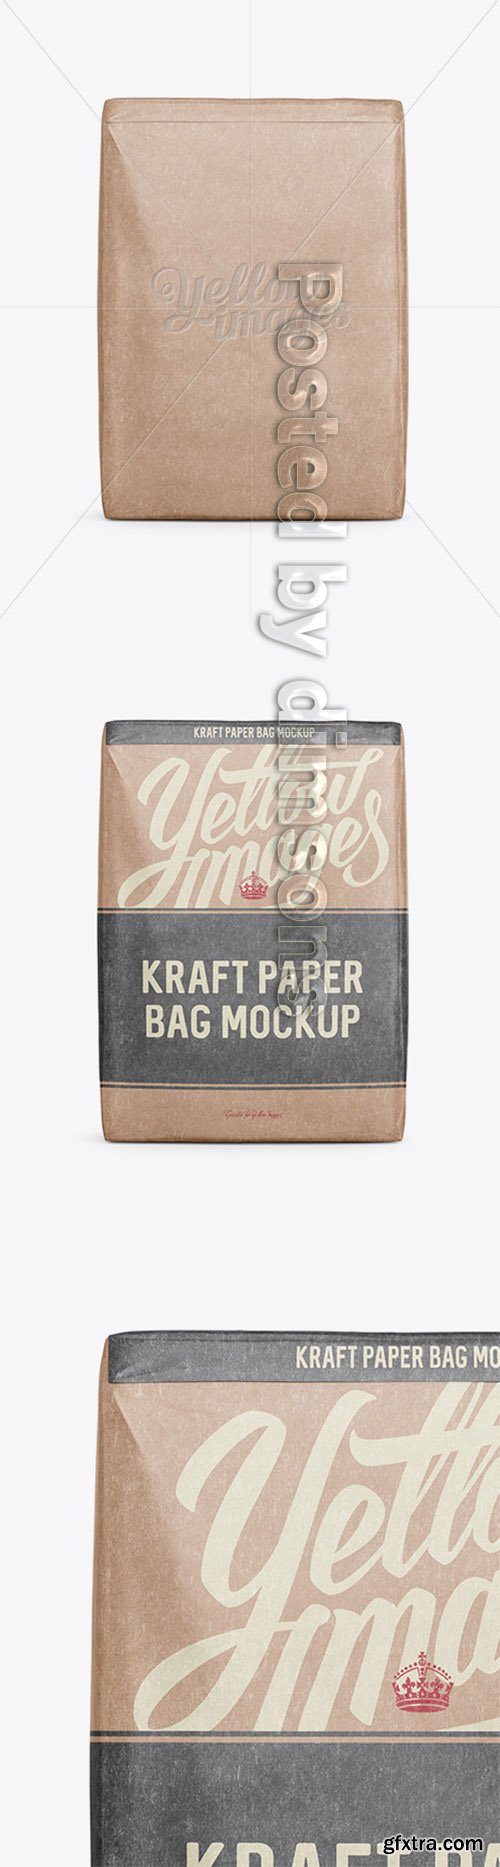 Kraft Paper Bag Mockup - Front View 15978